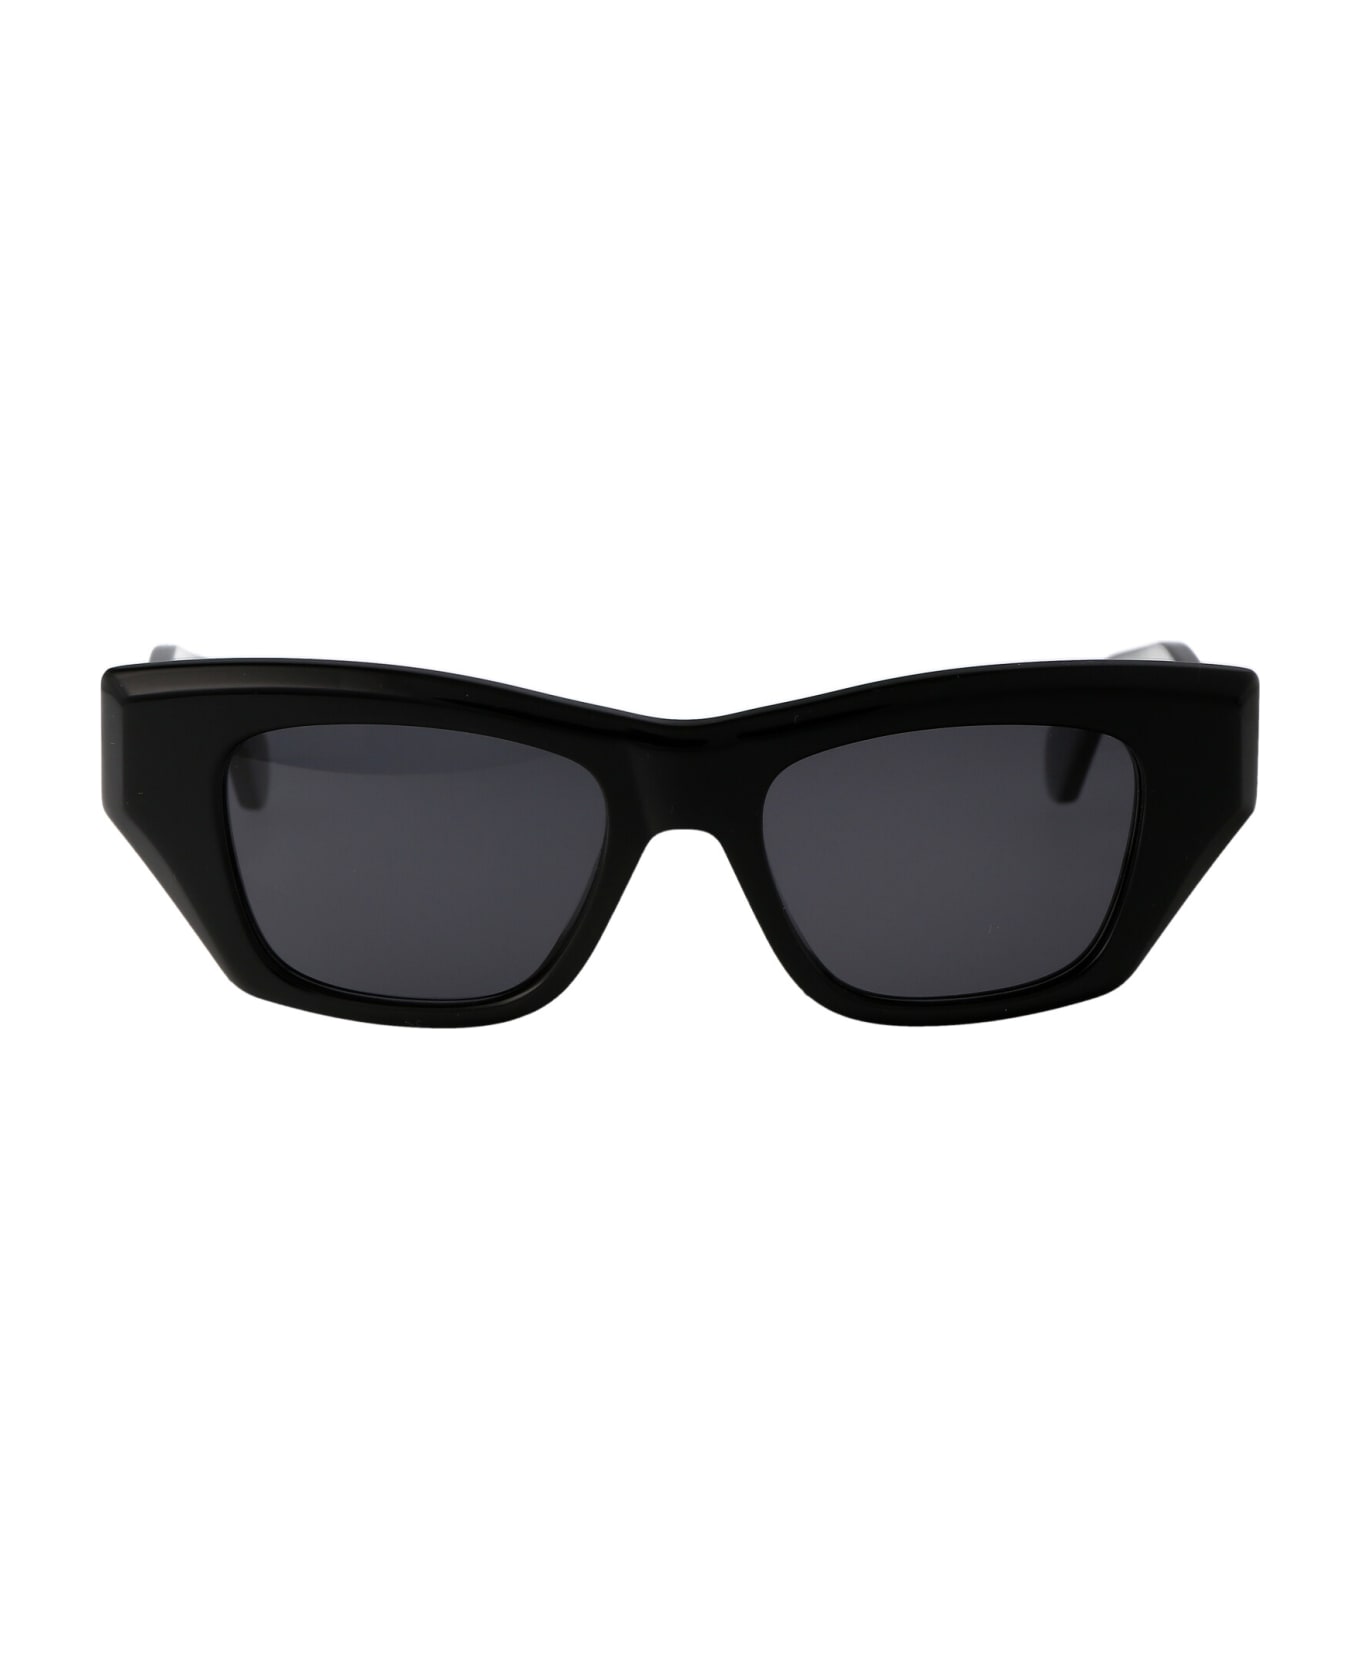 Alaia Aa0074s Sunglasses - 001 BLACK BLACK GREY